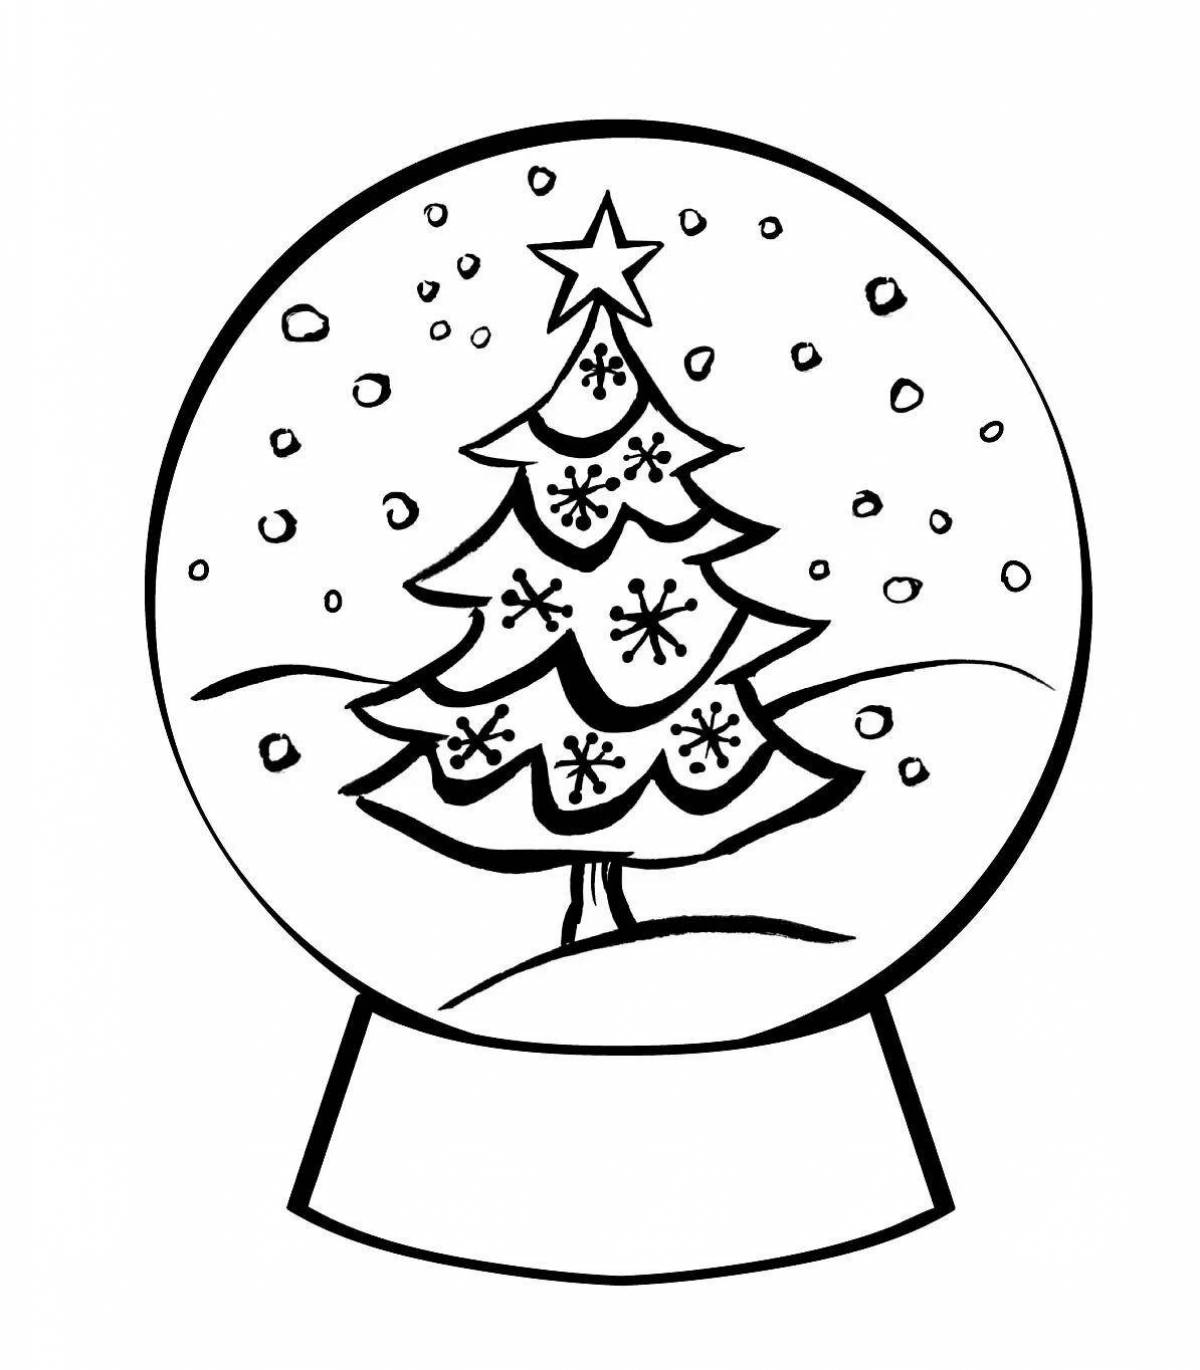 Glossy Christmas tree with balls